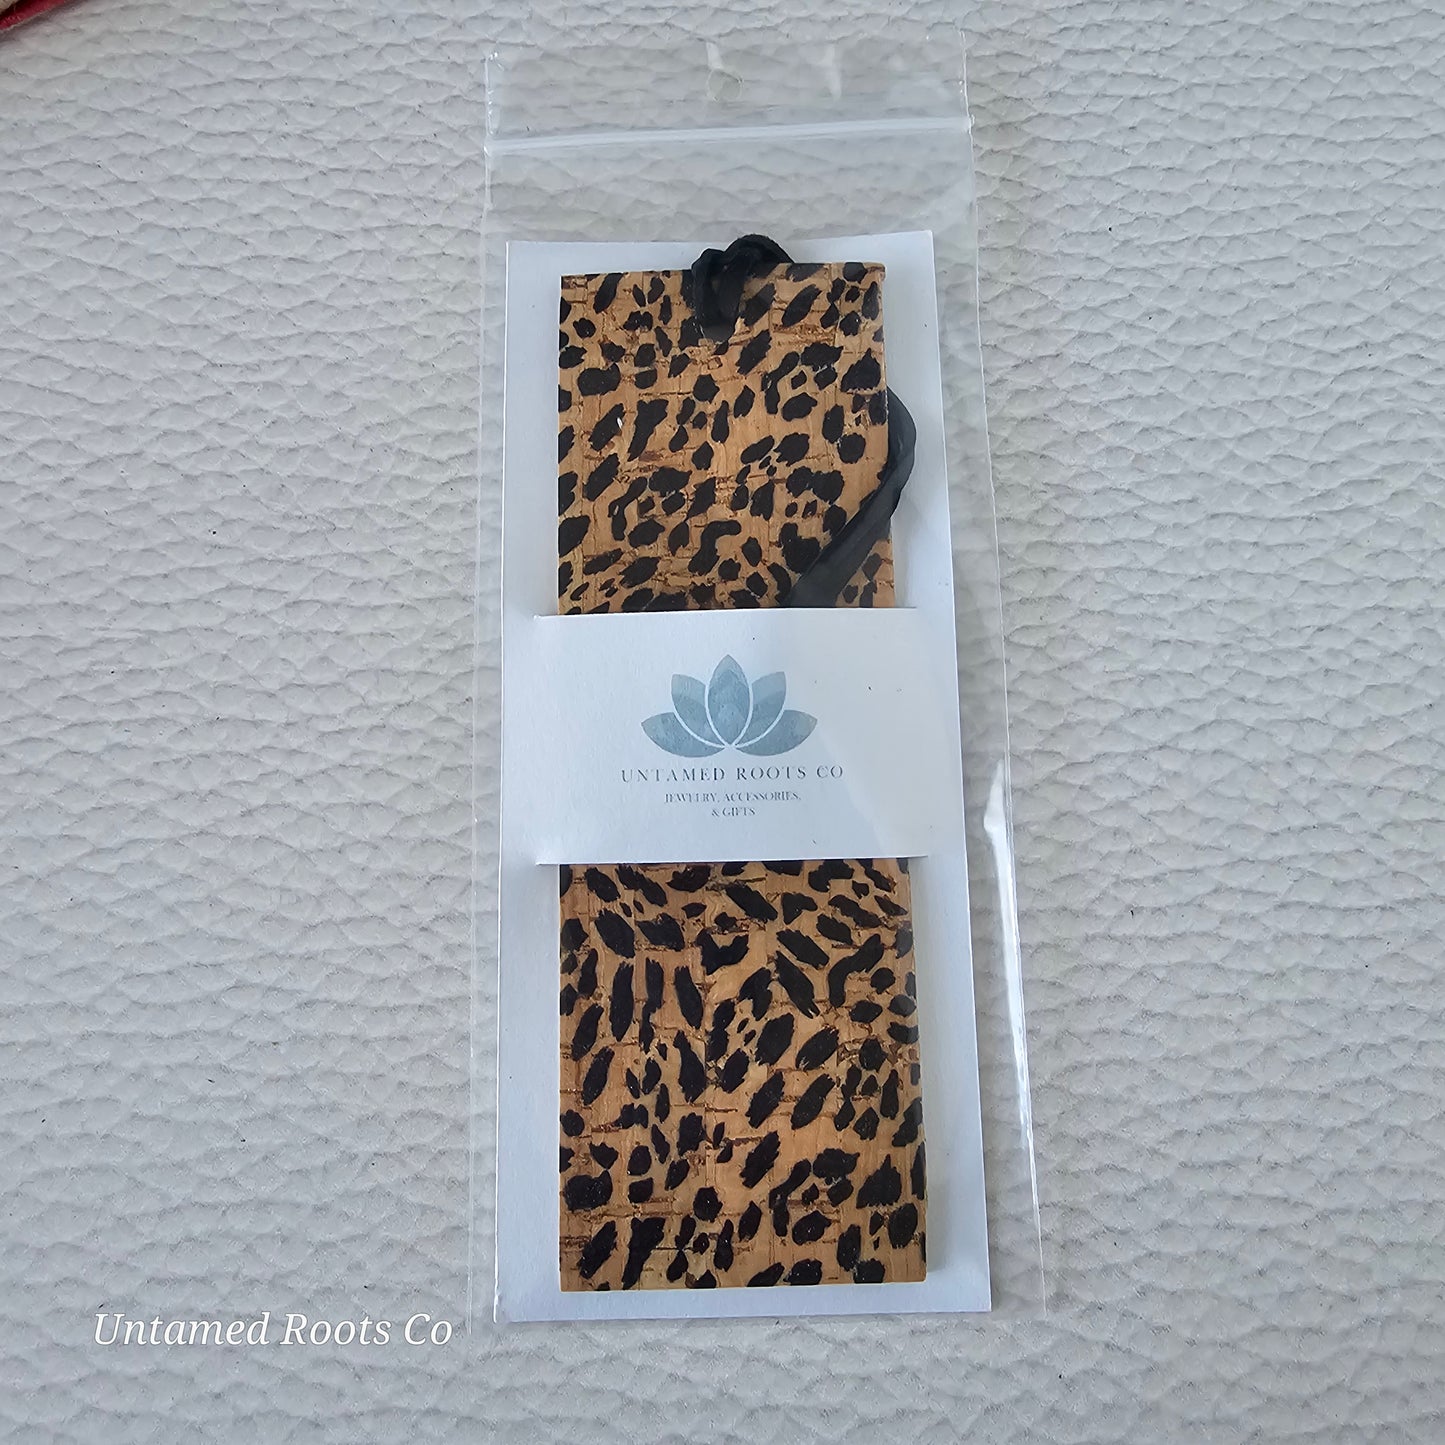 Leopard Leather Bookmark